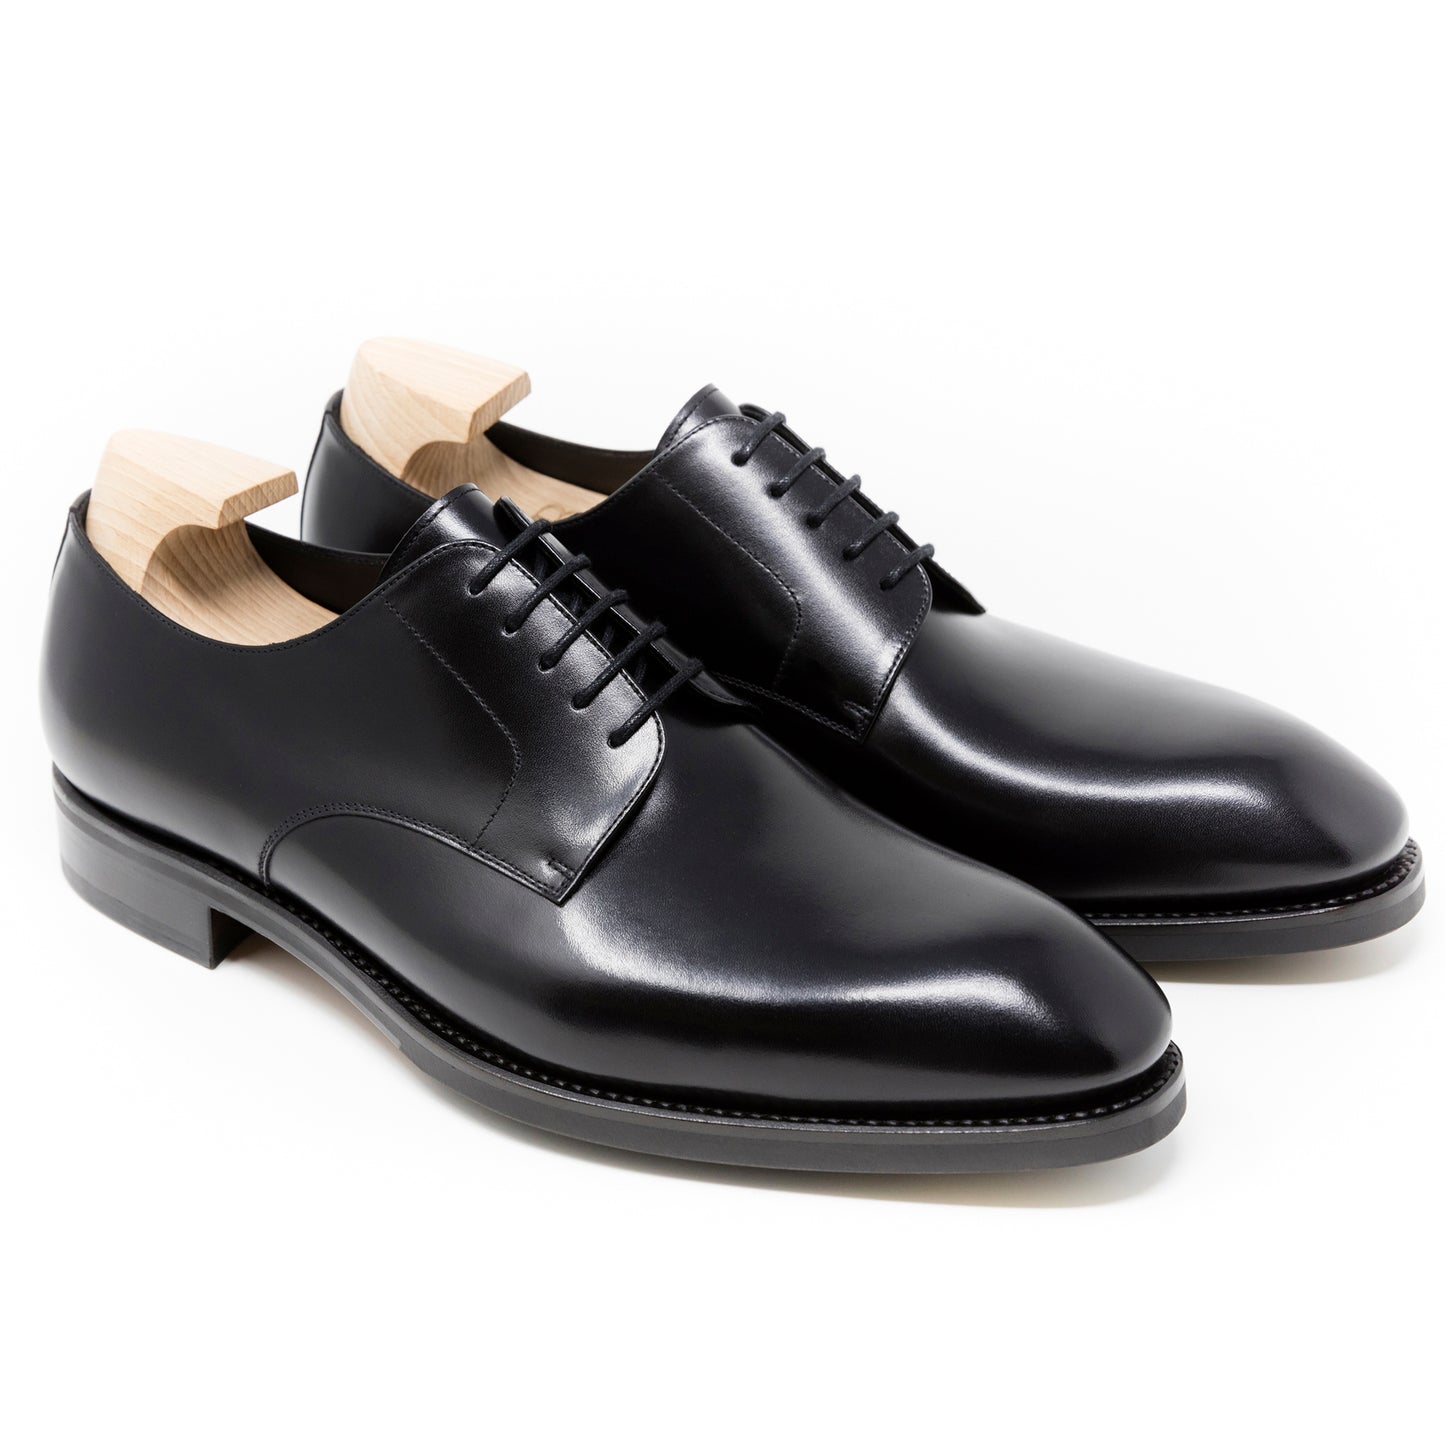 TLB Mallorca leather shoes 528 / ALAN / BOXCALF BLACK